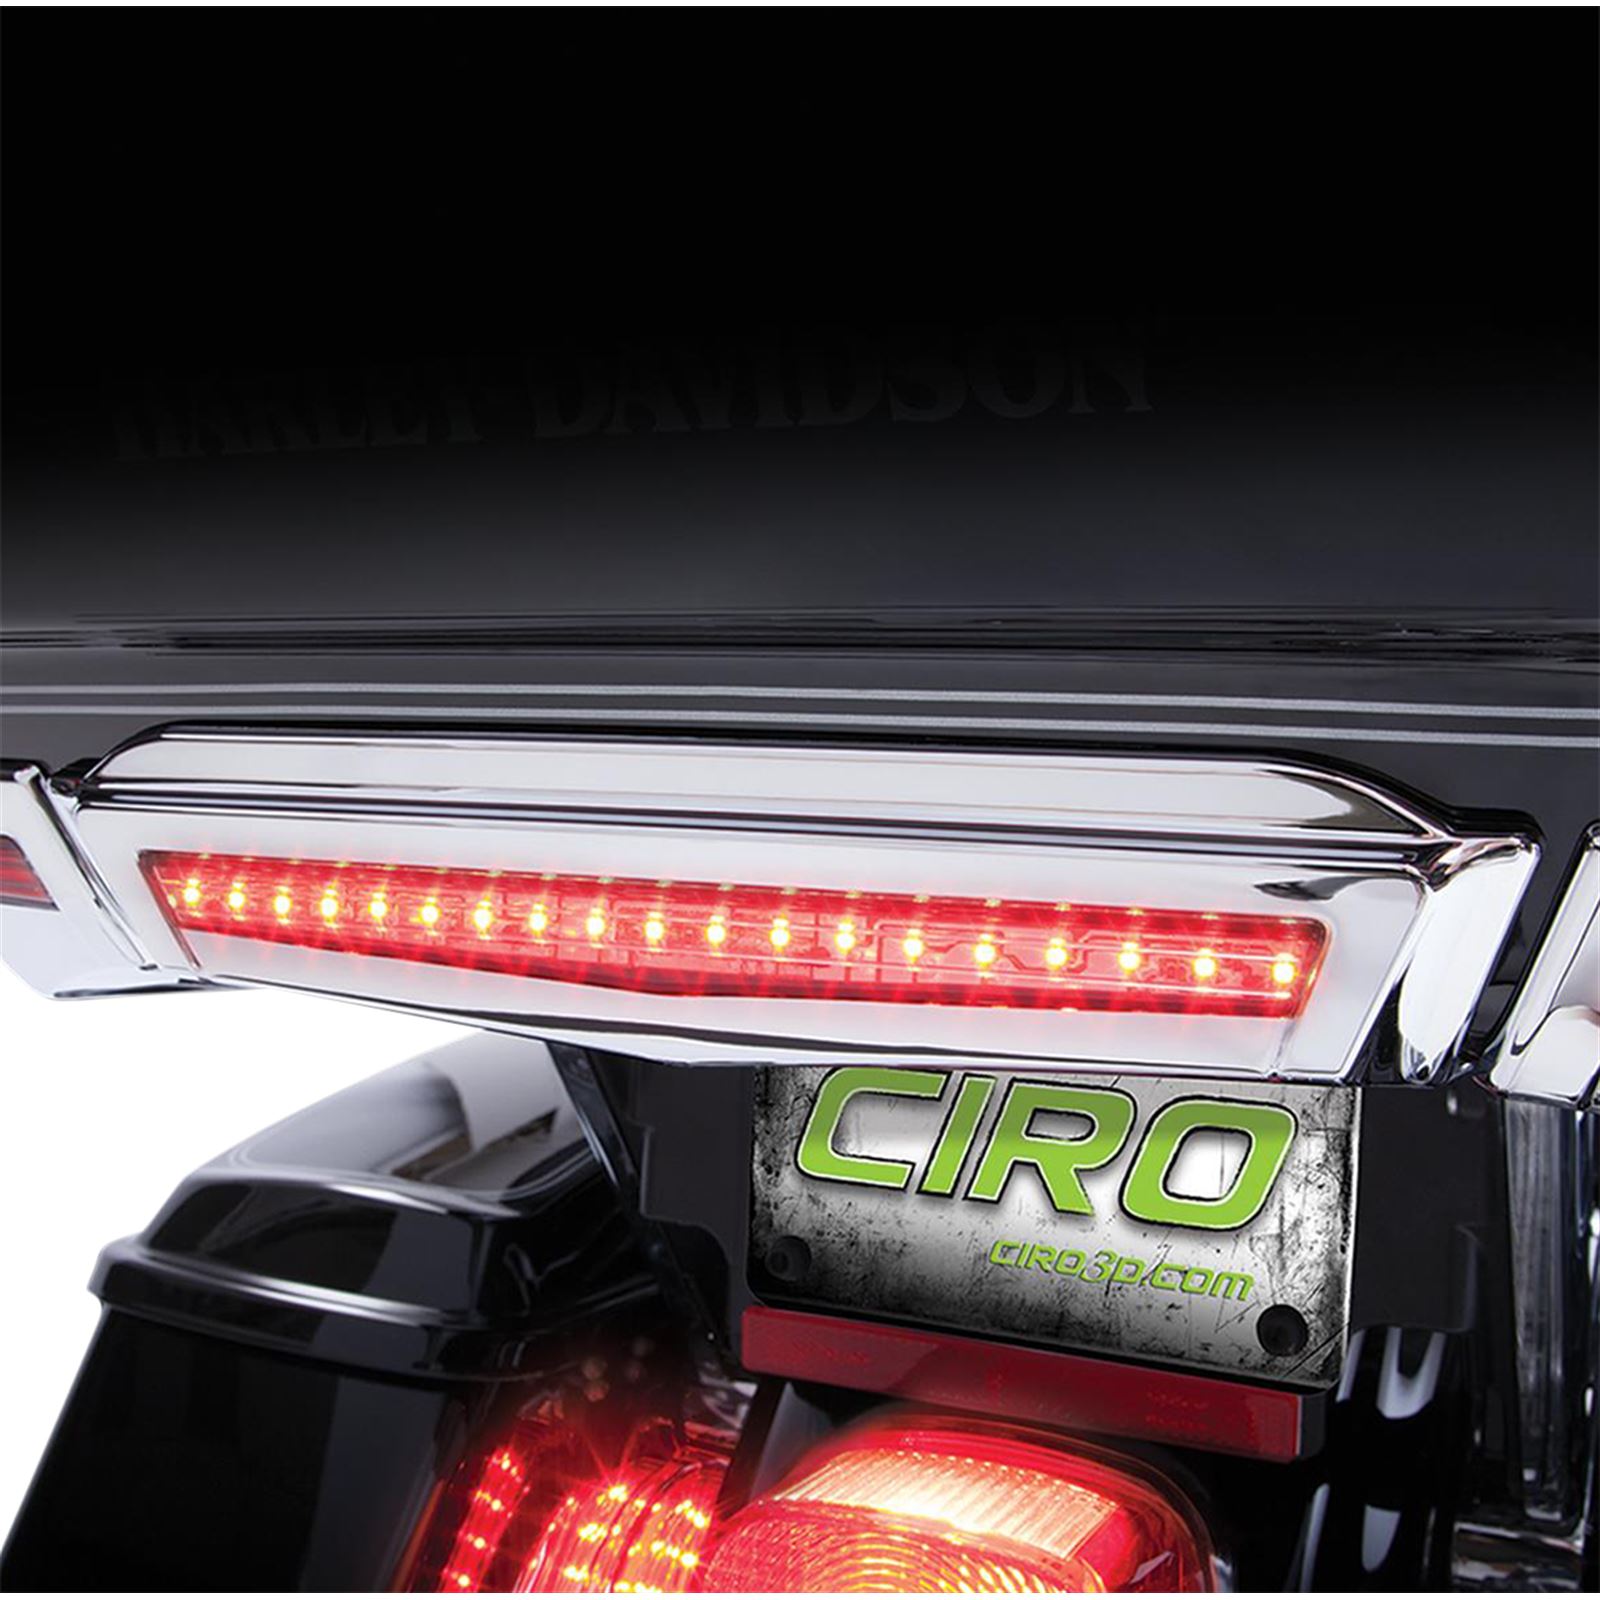 Ciro Center Brake Light - Chrome